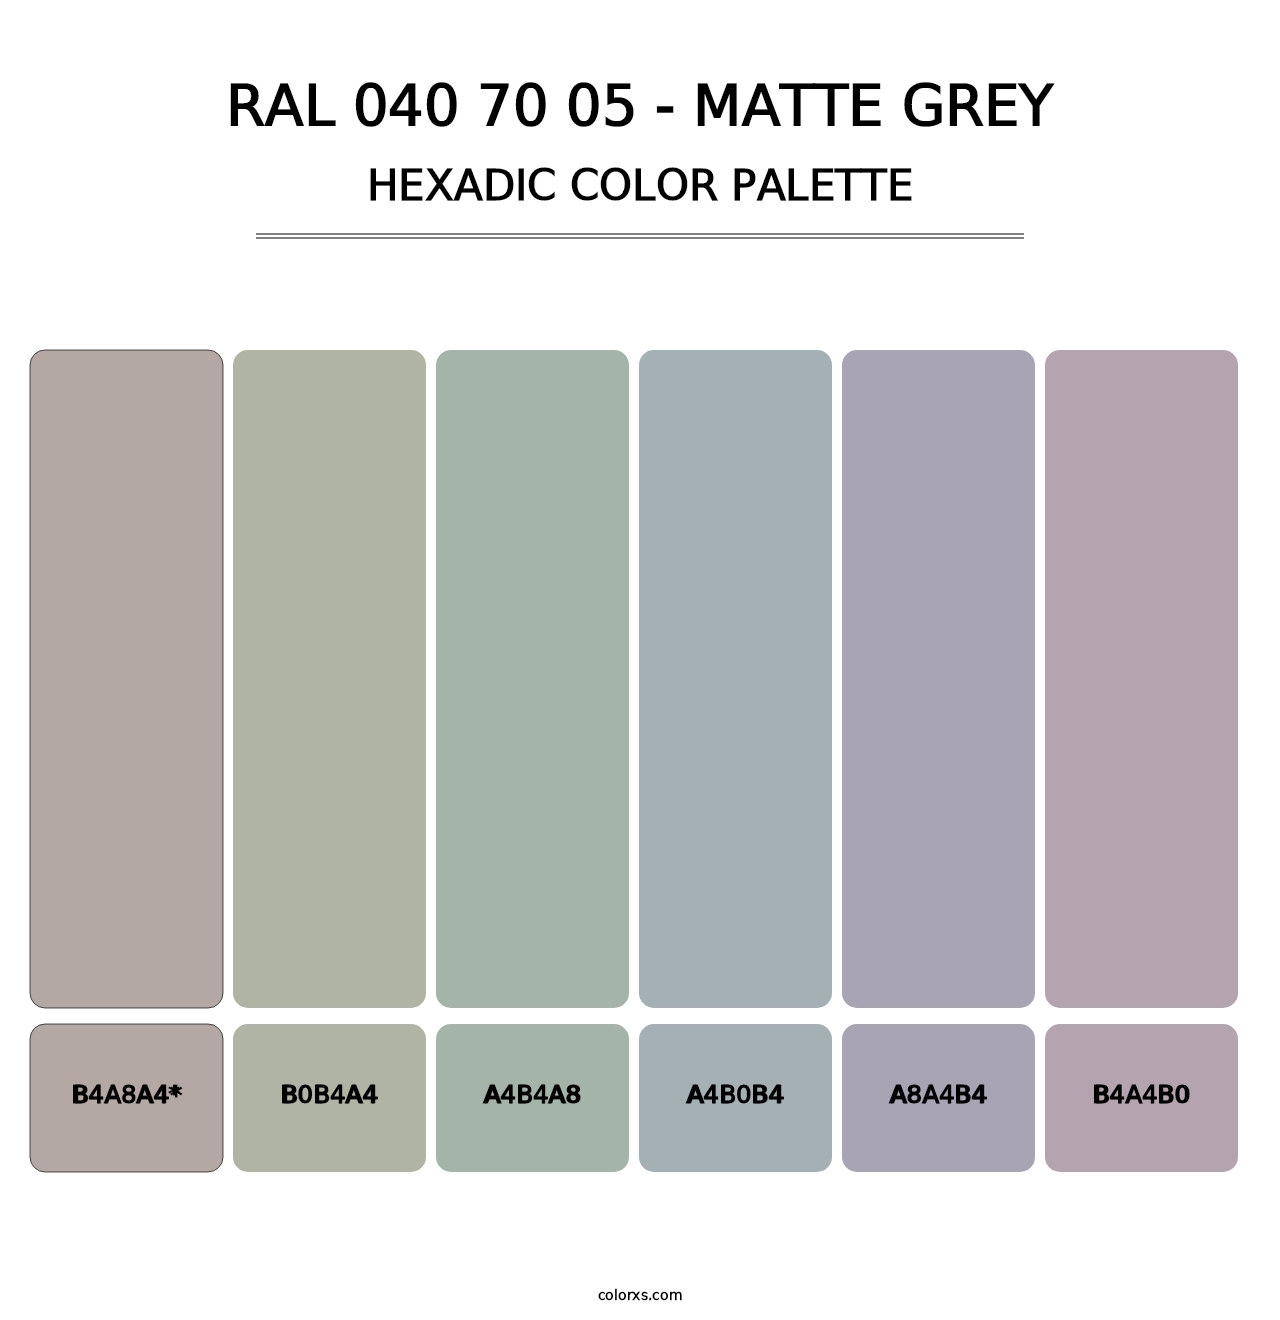 RAL 040 70 05 - Matte Grey - Hexadic Color Palette